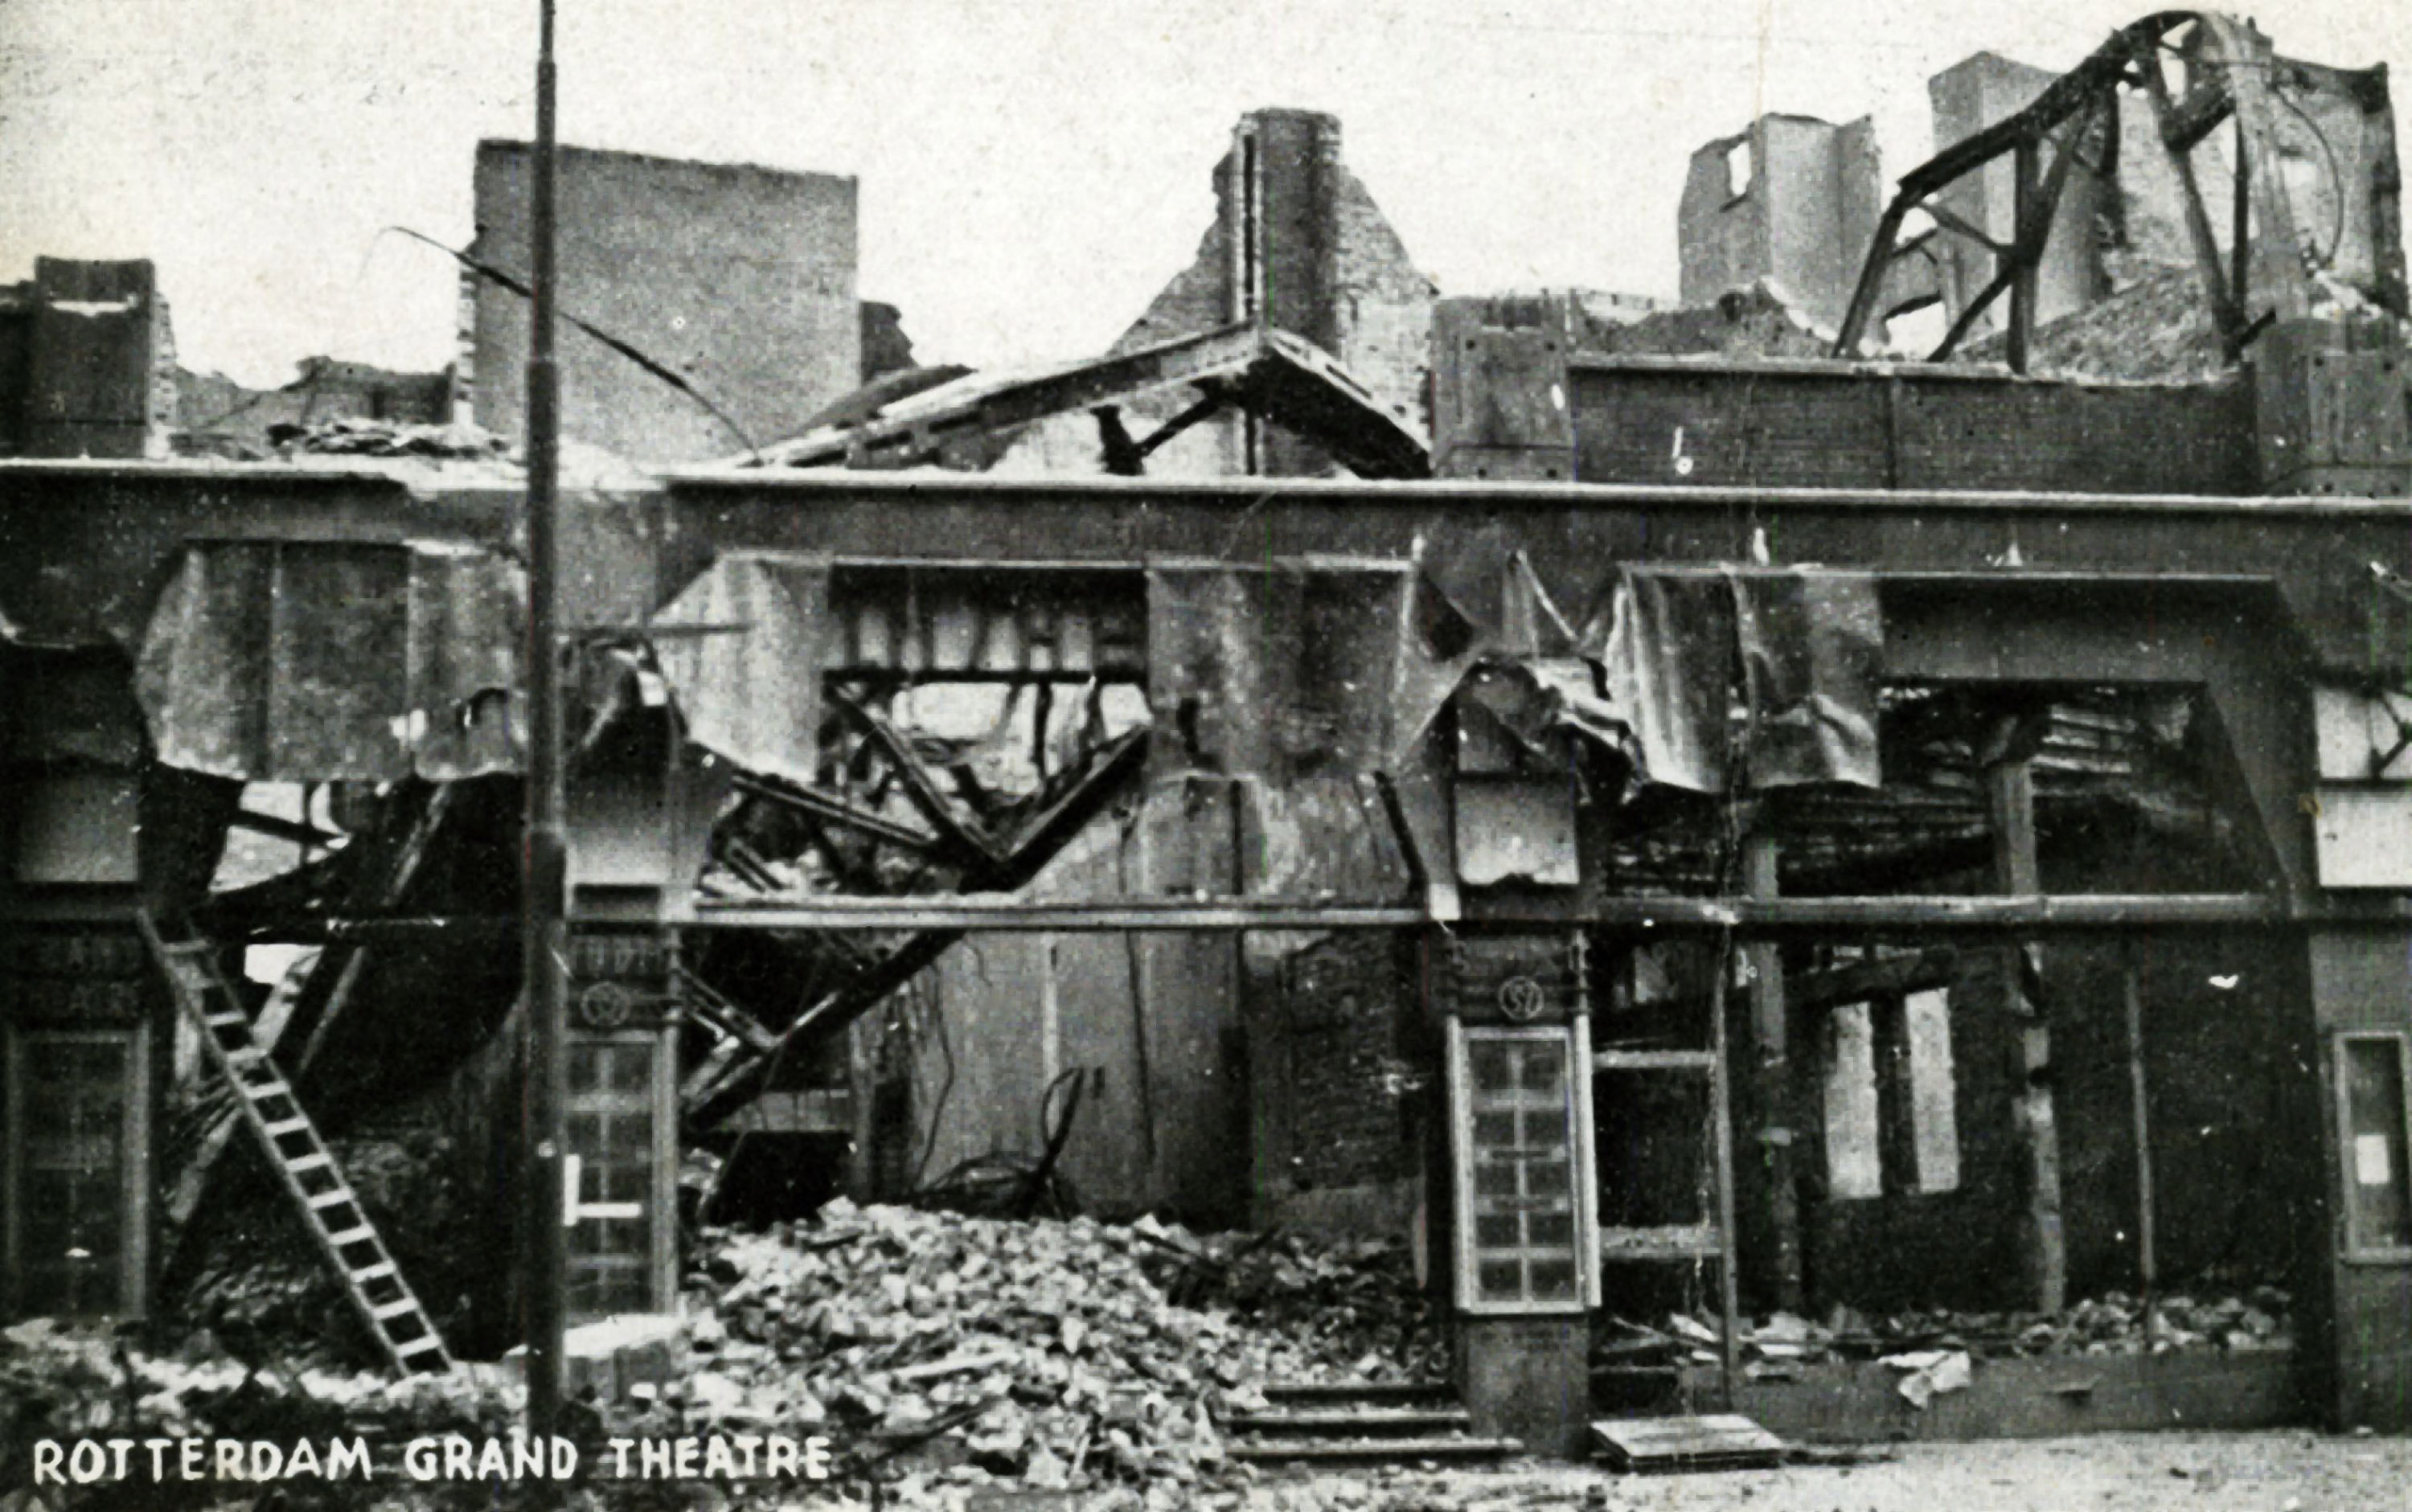 Grand Theater Rotterdam na bombardement 14 mei 1940